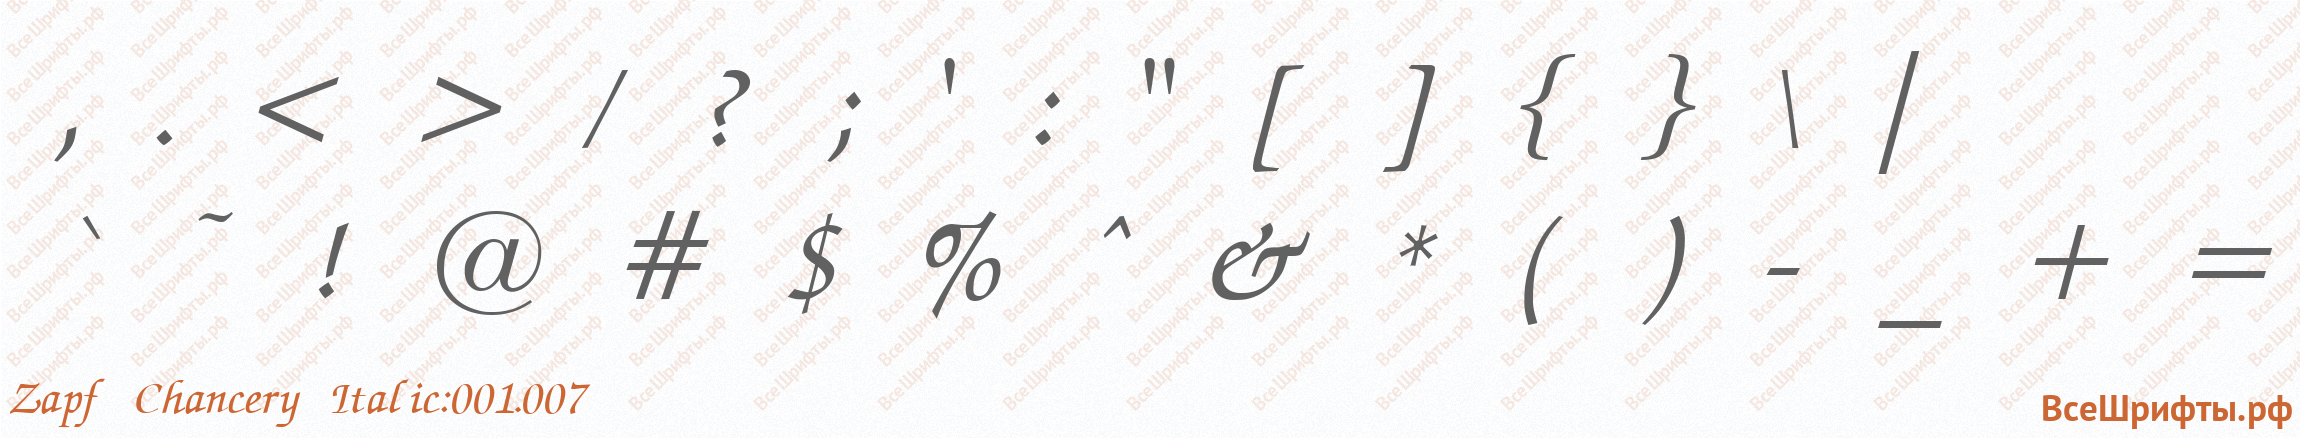 Шрифт Zapf Chancery Italic:001.007 со знаками препинания и пунктуации